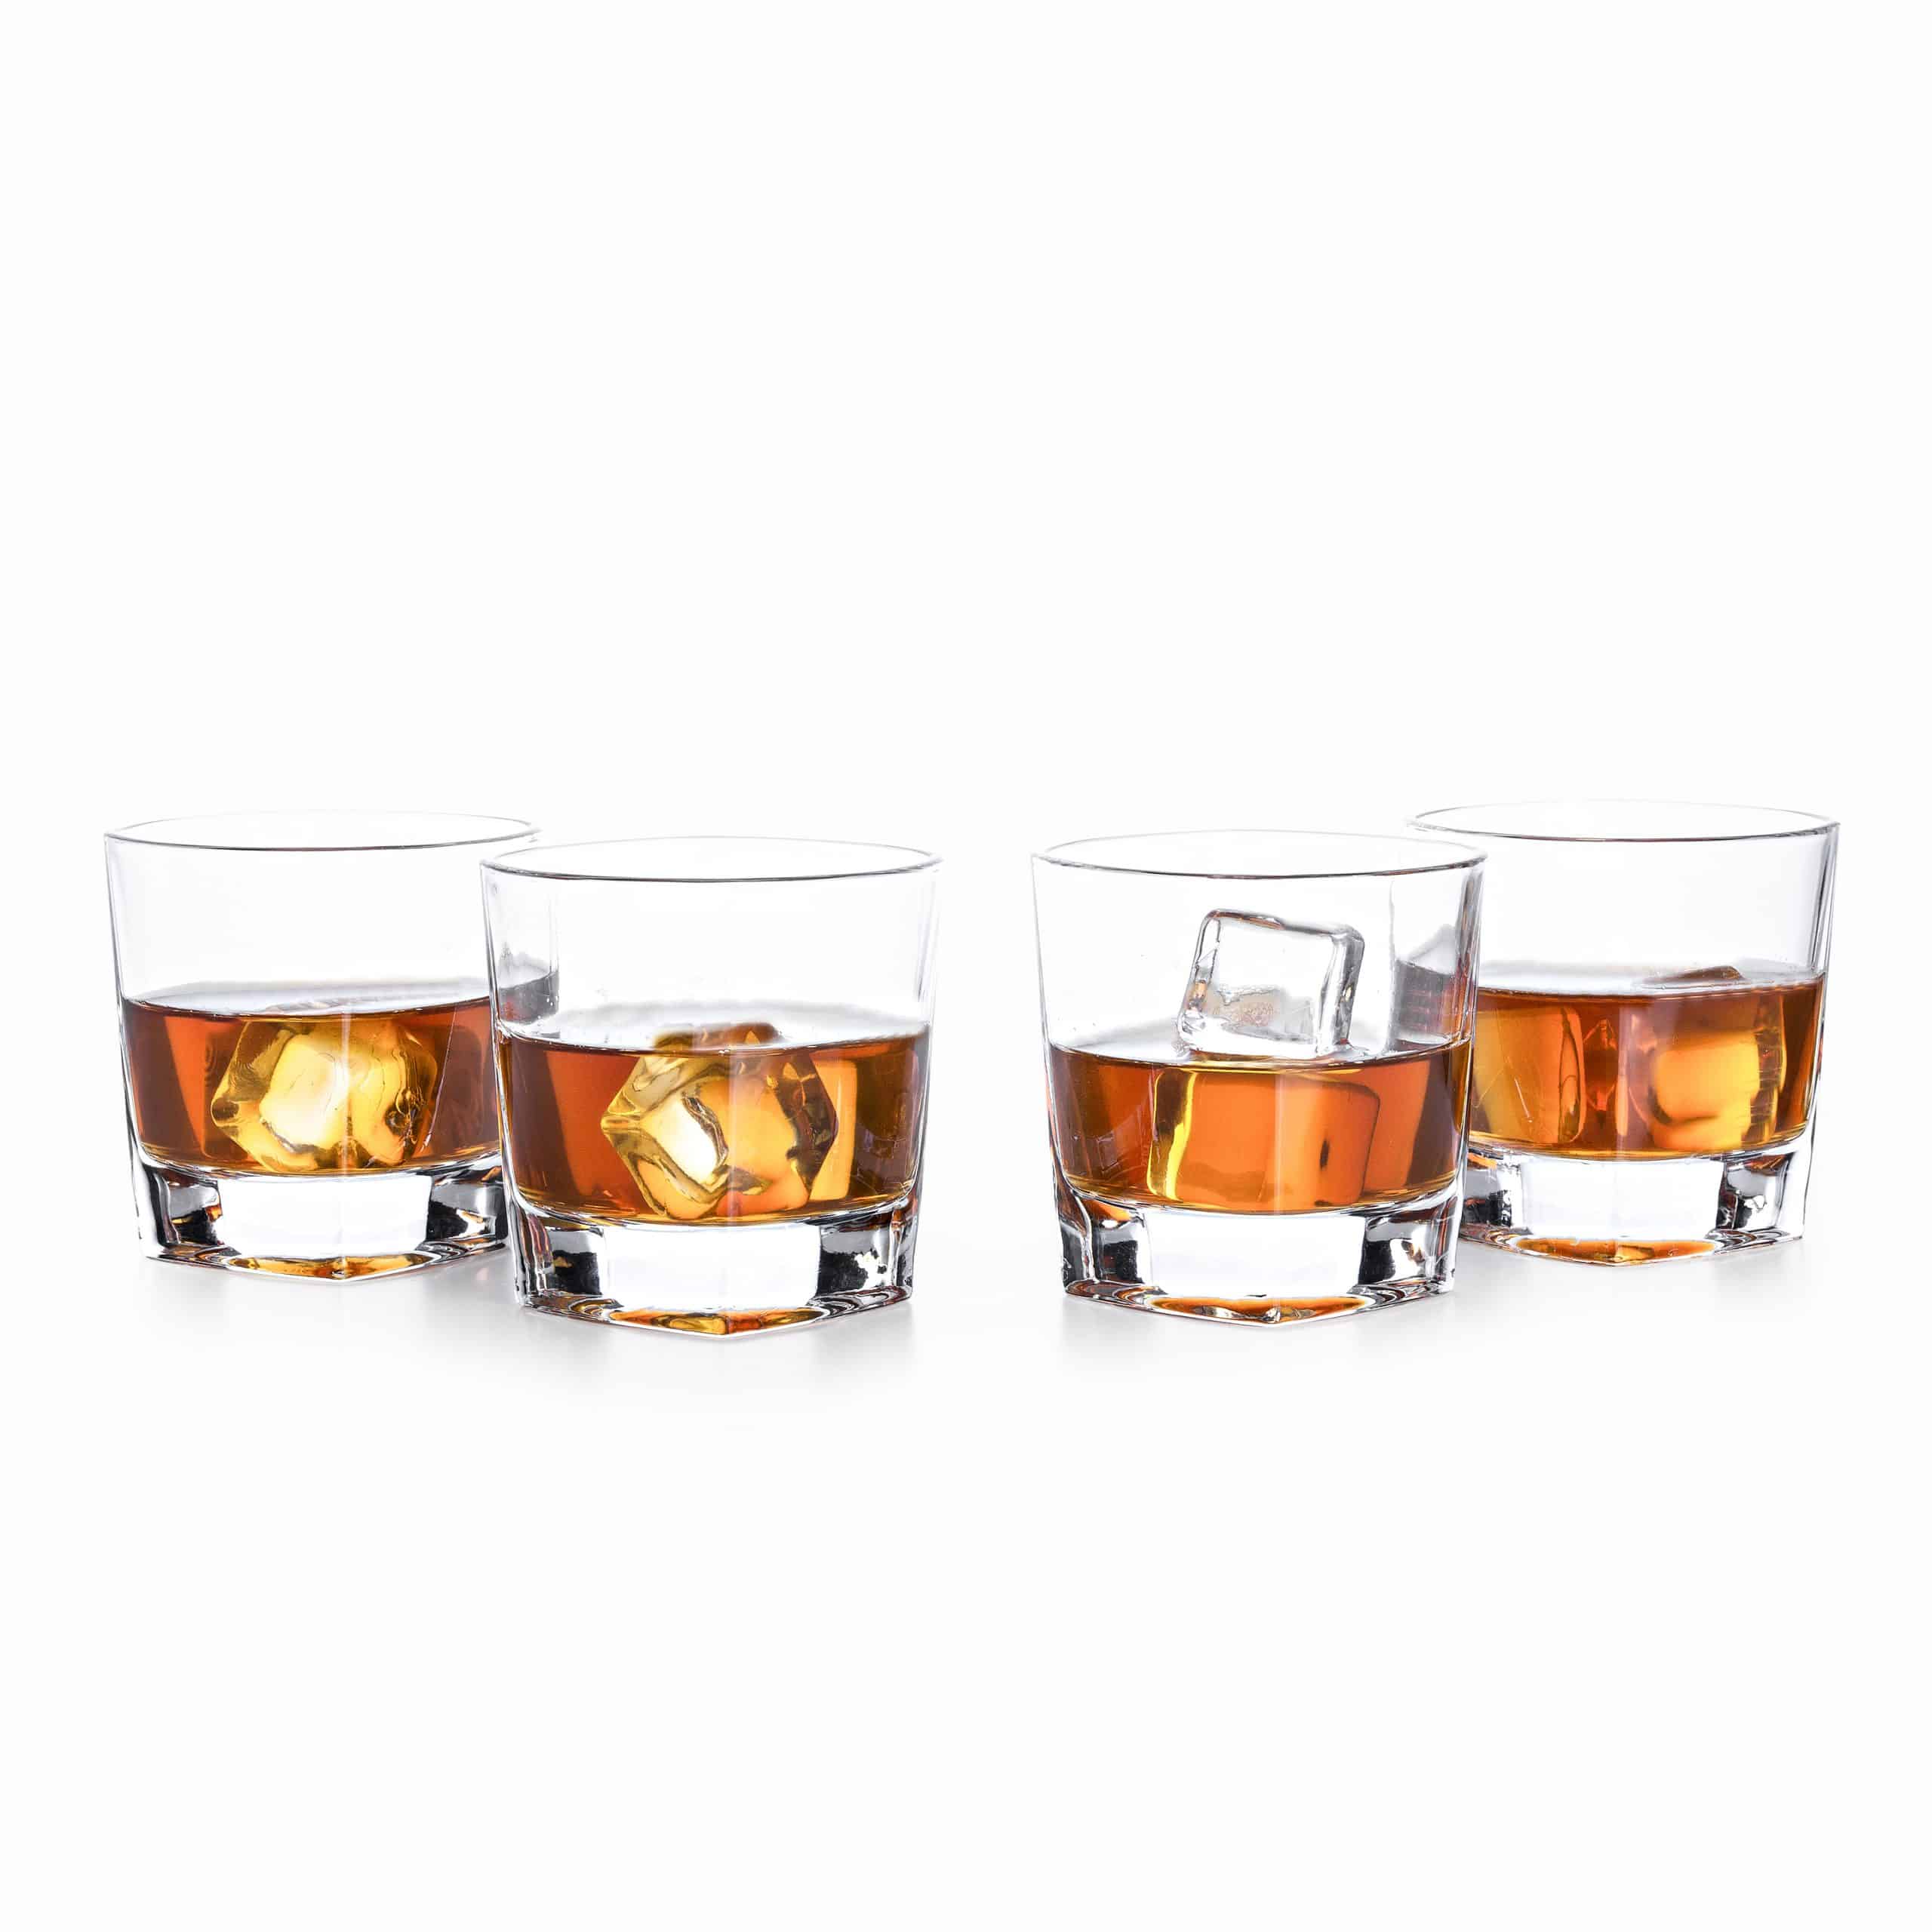 Factureerbaar vaardigheid Fantastisch Whiskey Glazen Set Donella - loodvrij kristal glas - VDN